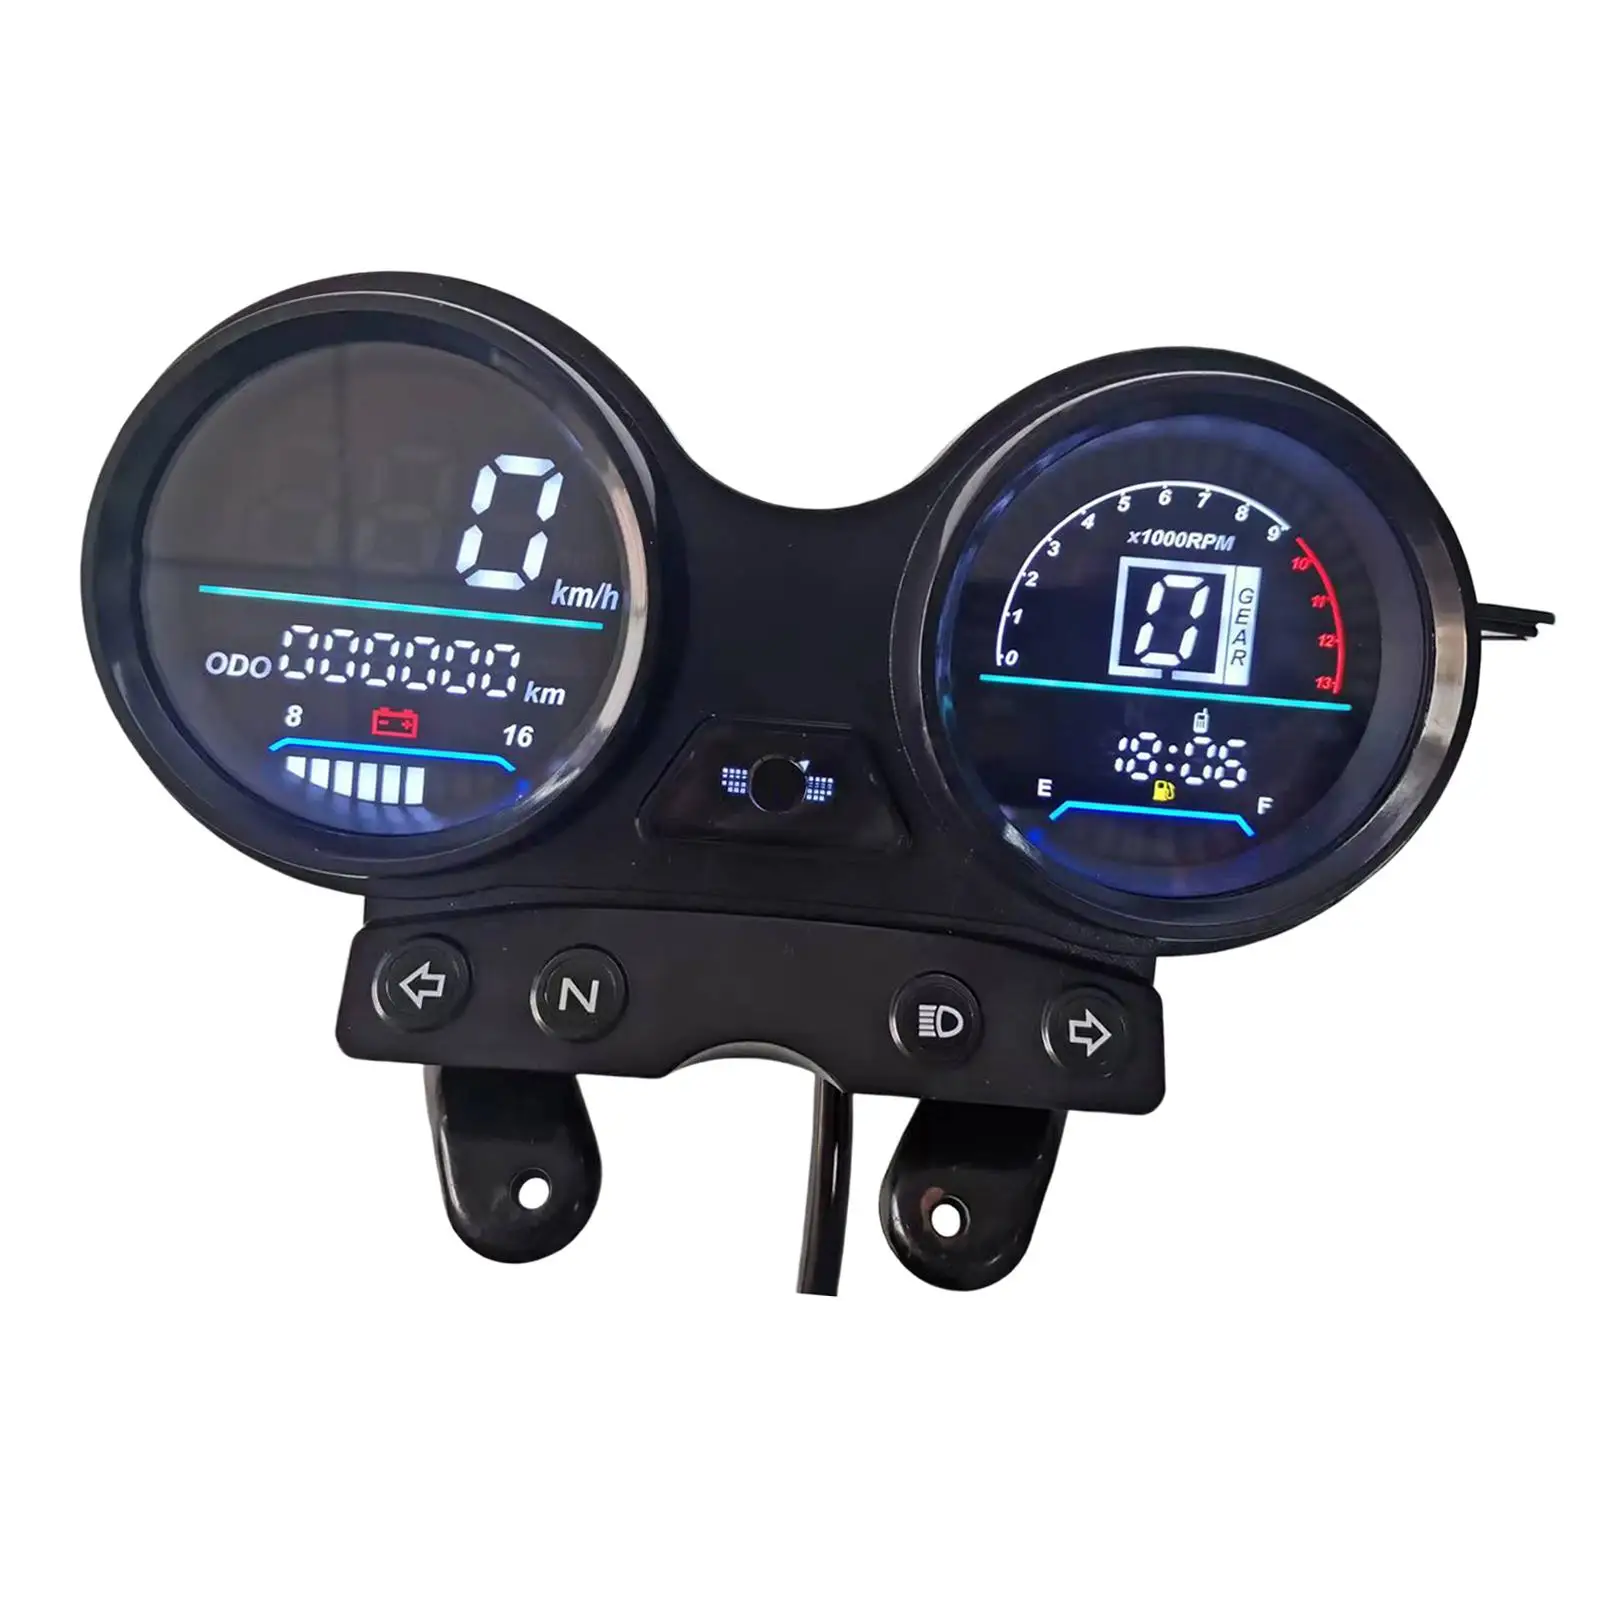 DC 12V Motorcycle Odometer Speedometer Fuel Gauge for Ybr 125 Accessory